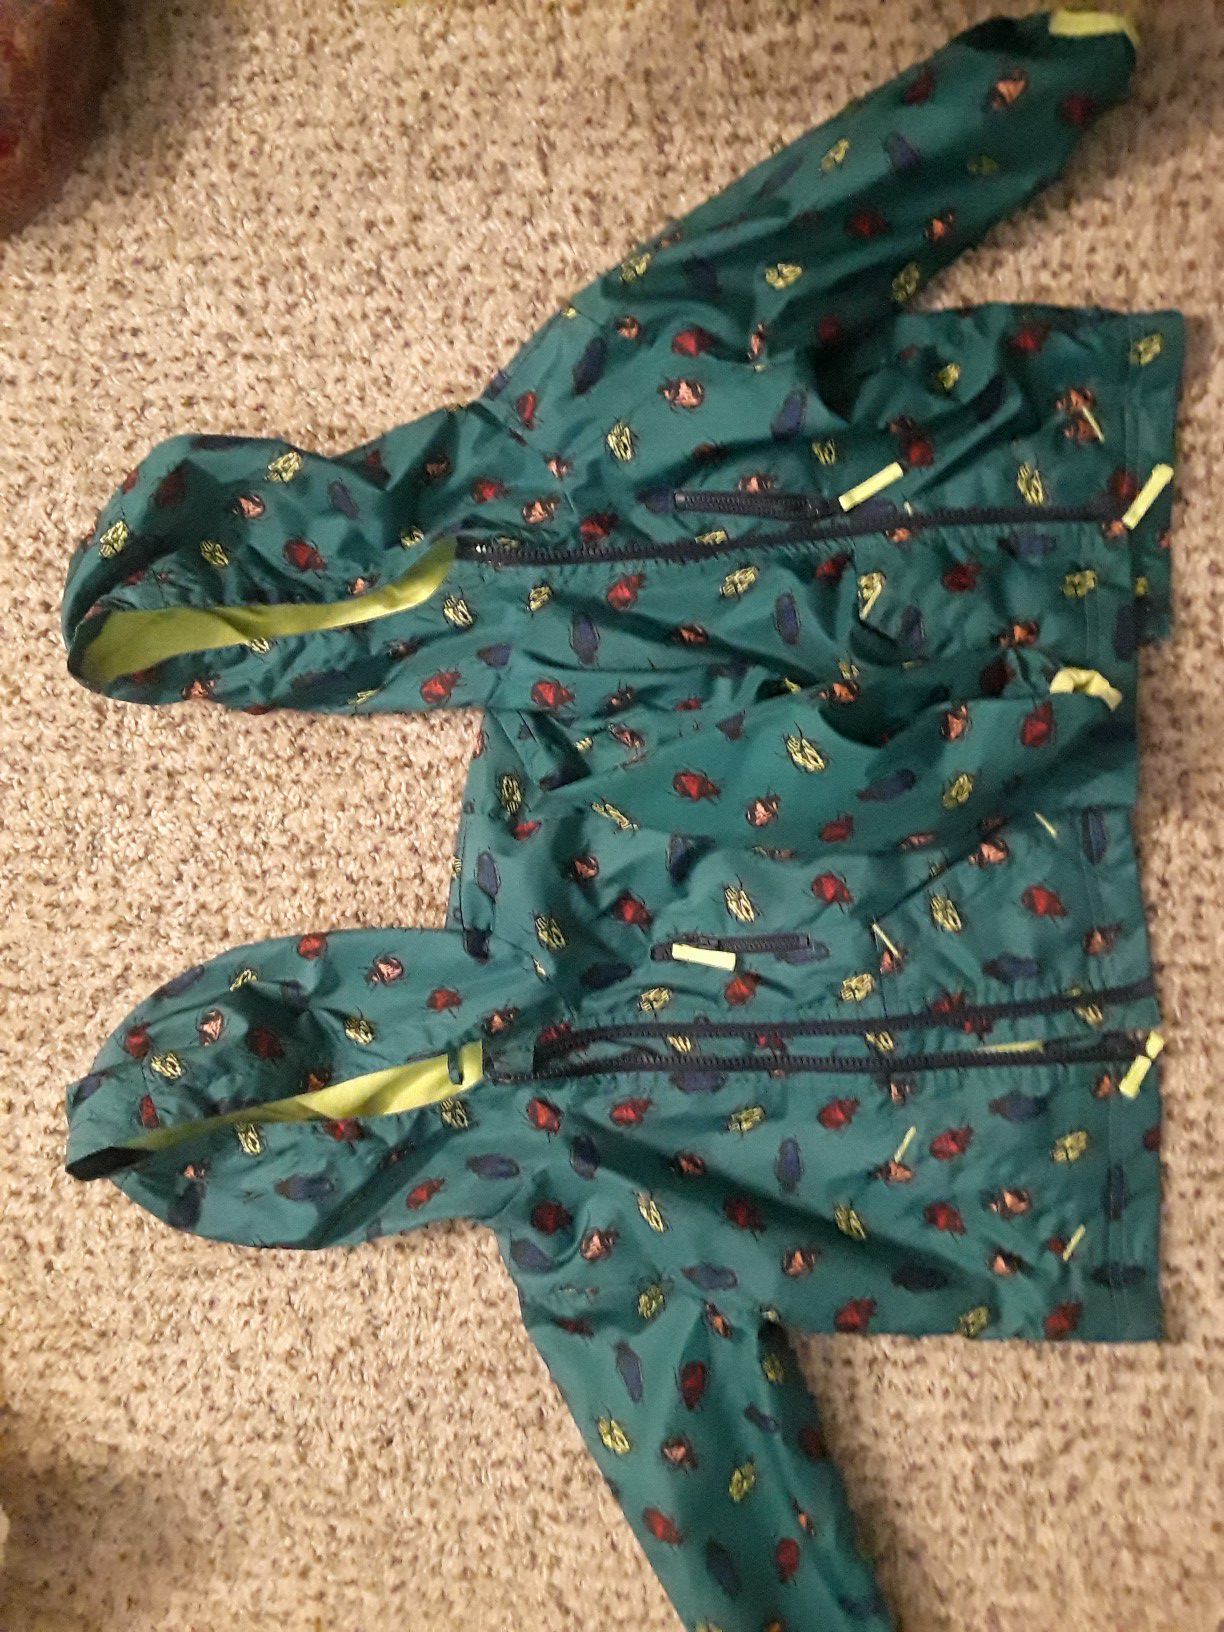 Toddler rain coats and jacket